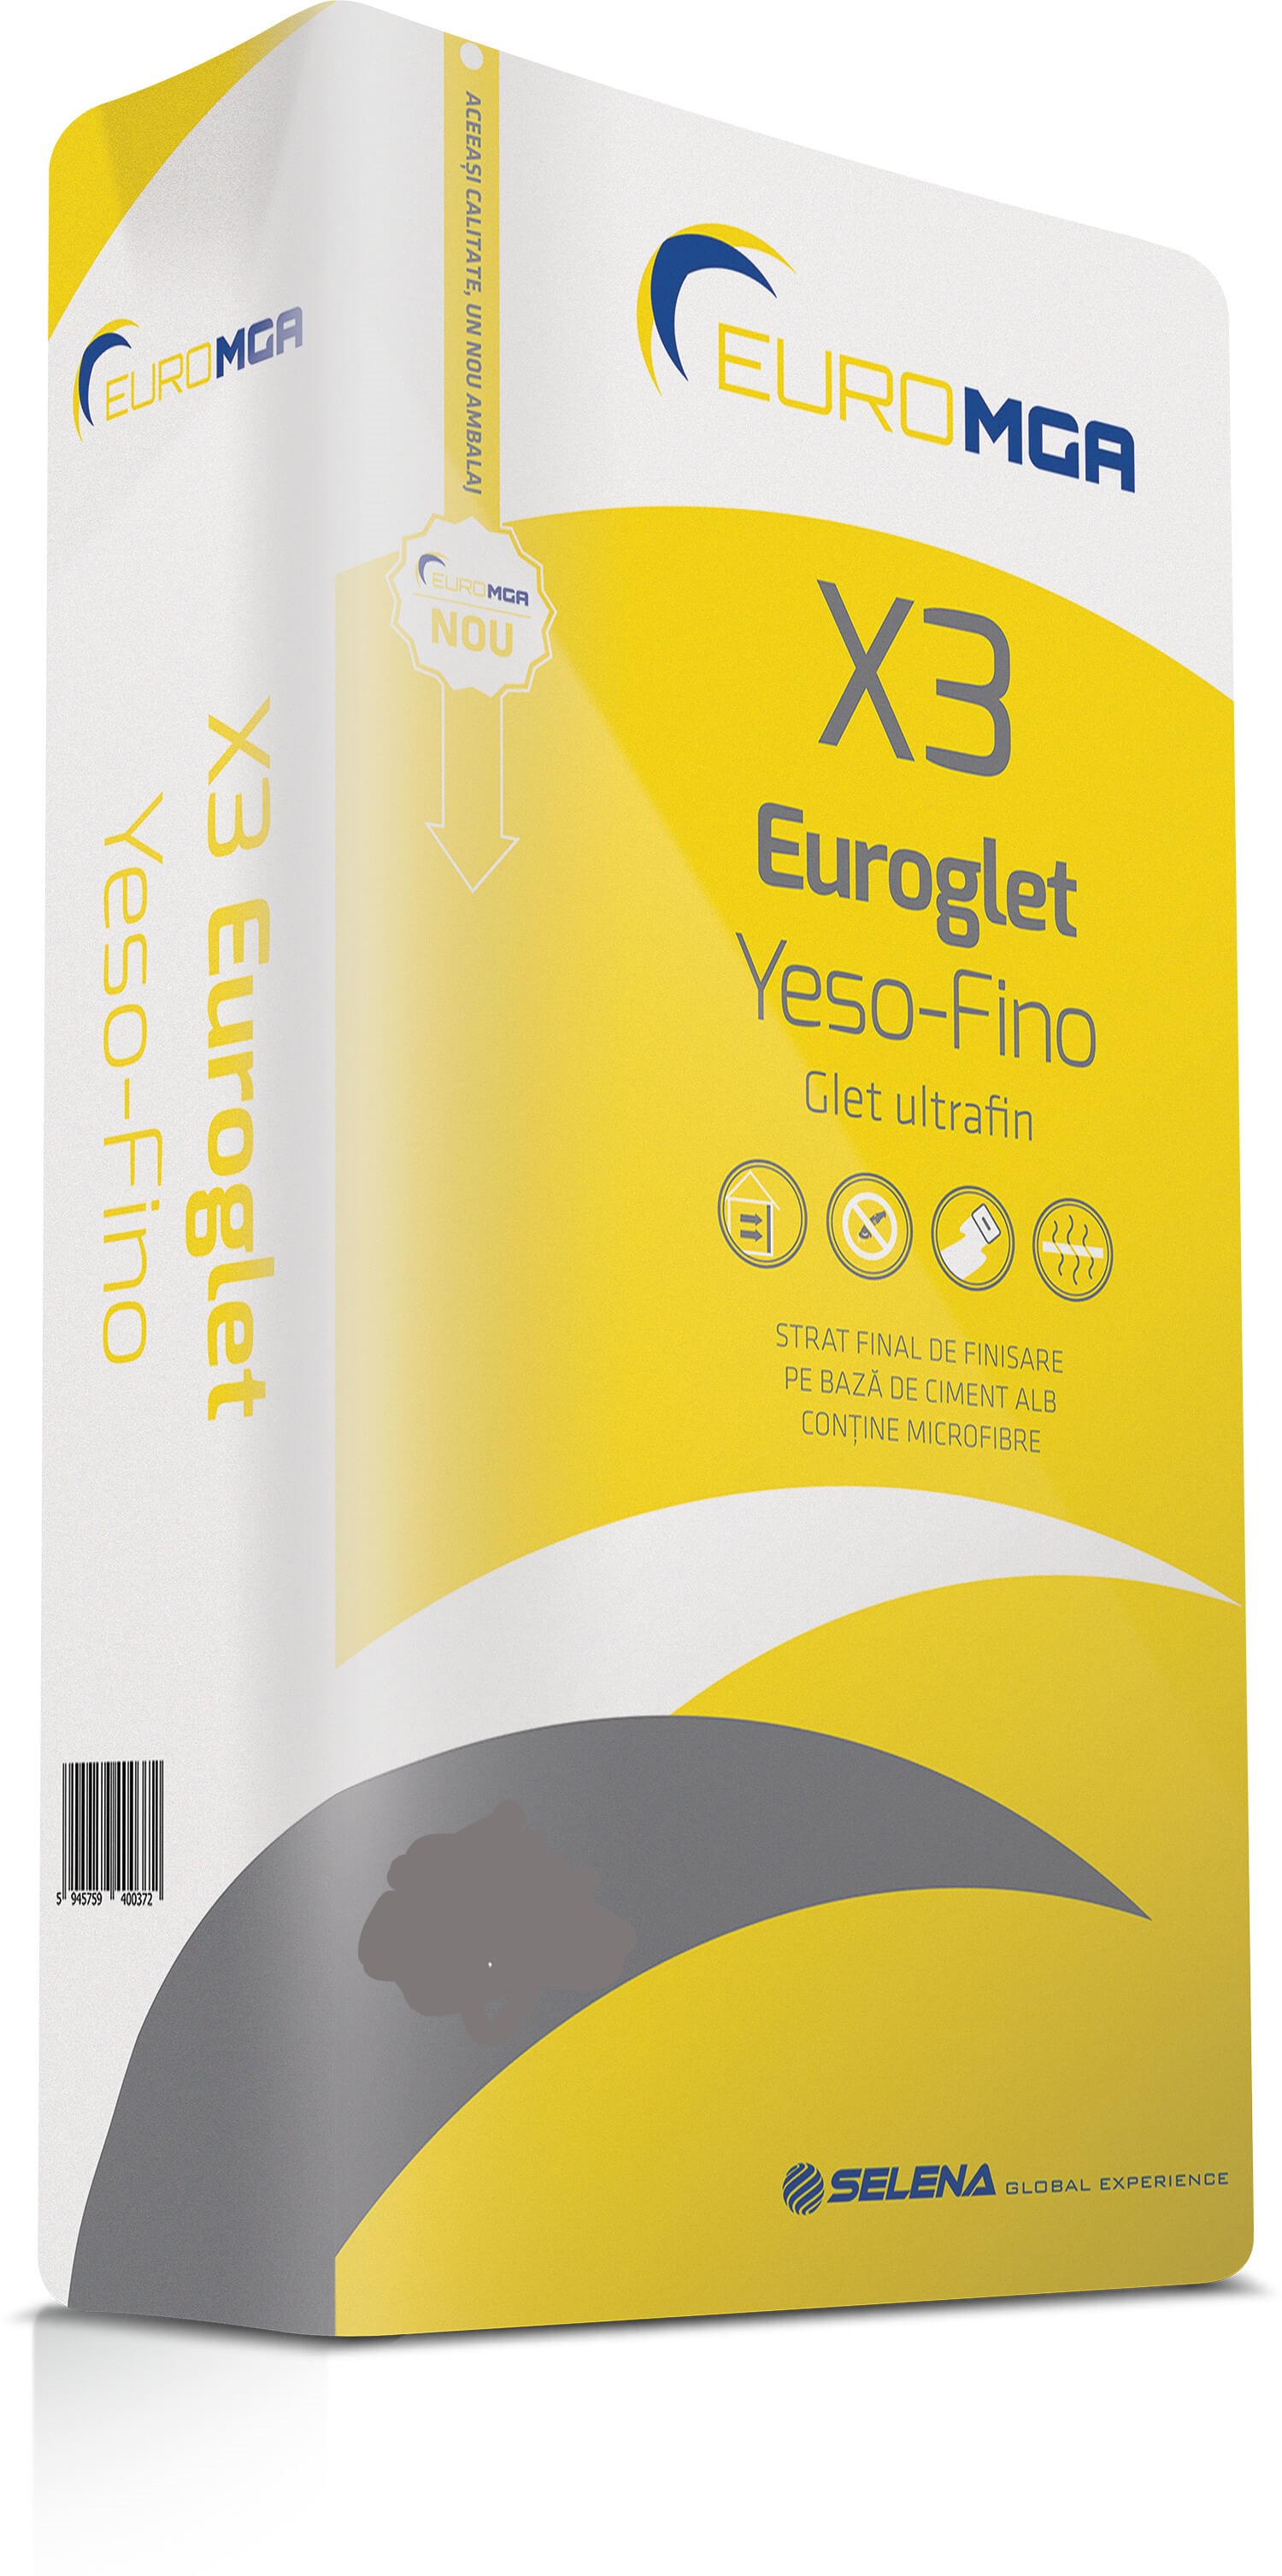 Gleturi - Glet ultrafin de finisare X3 Euroglet Yeso-Fino EuroMGA 5 kg, https:maxbau.ro